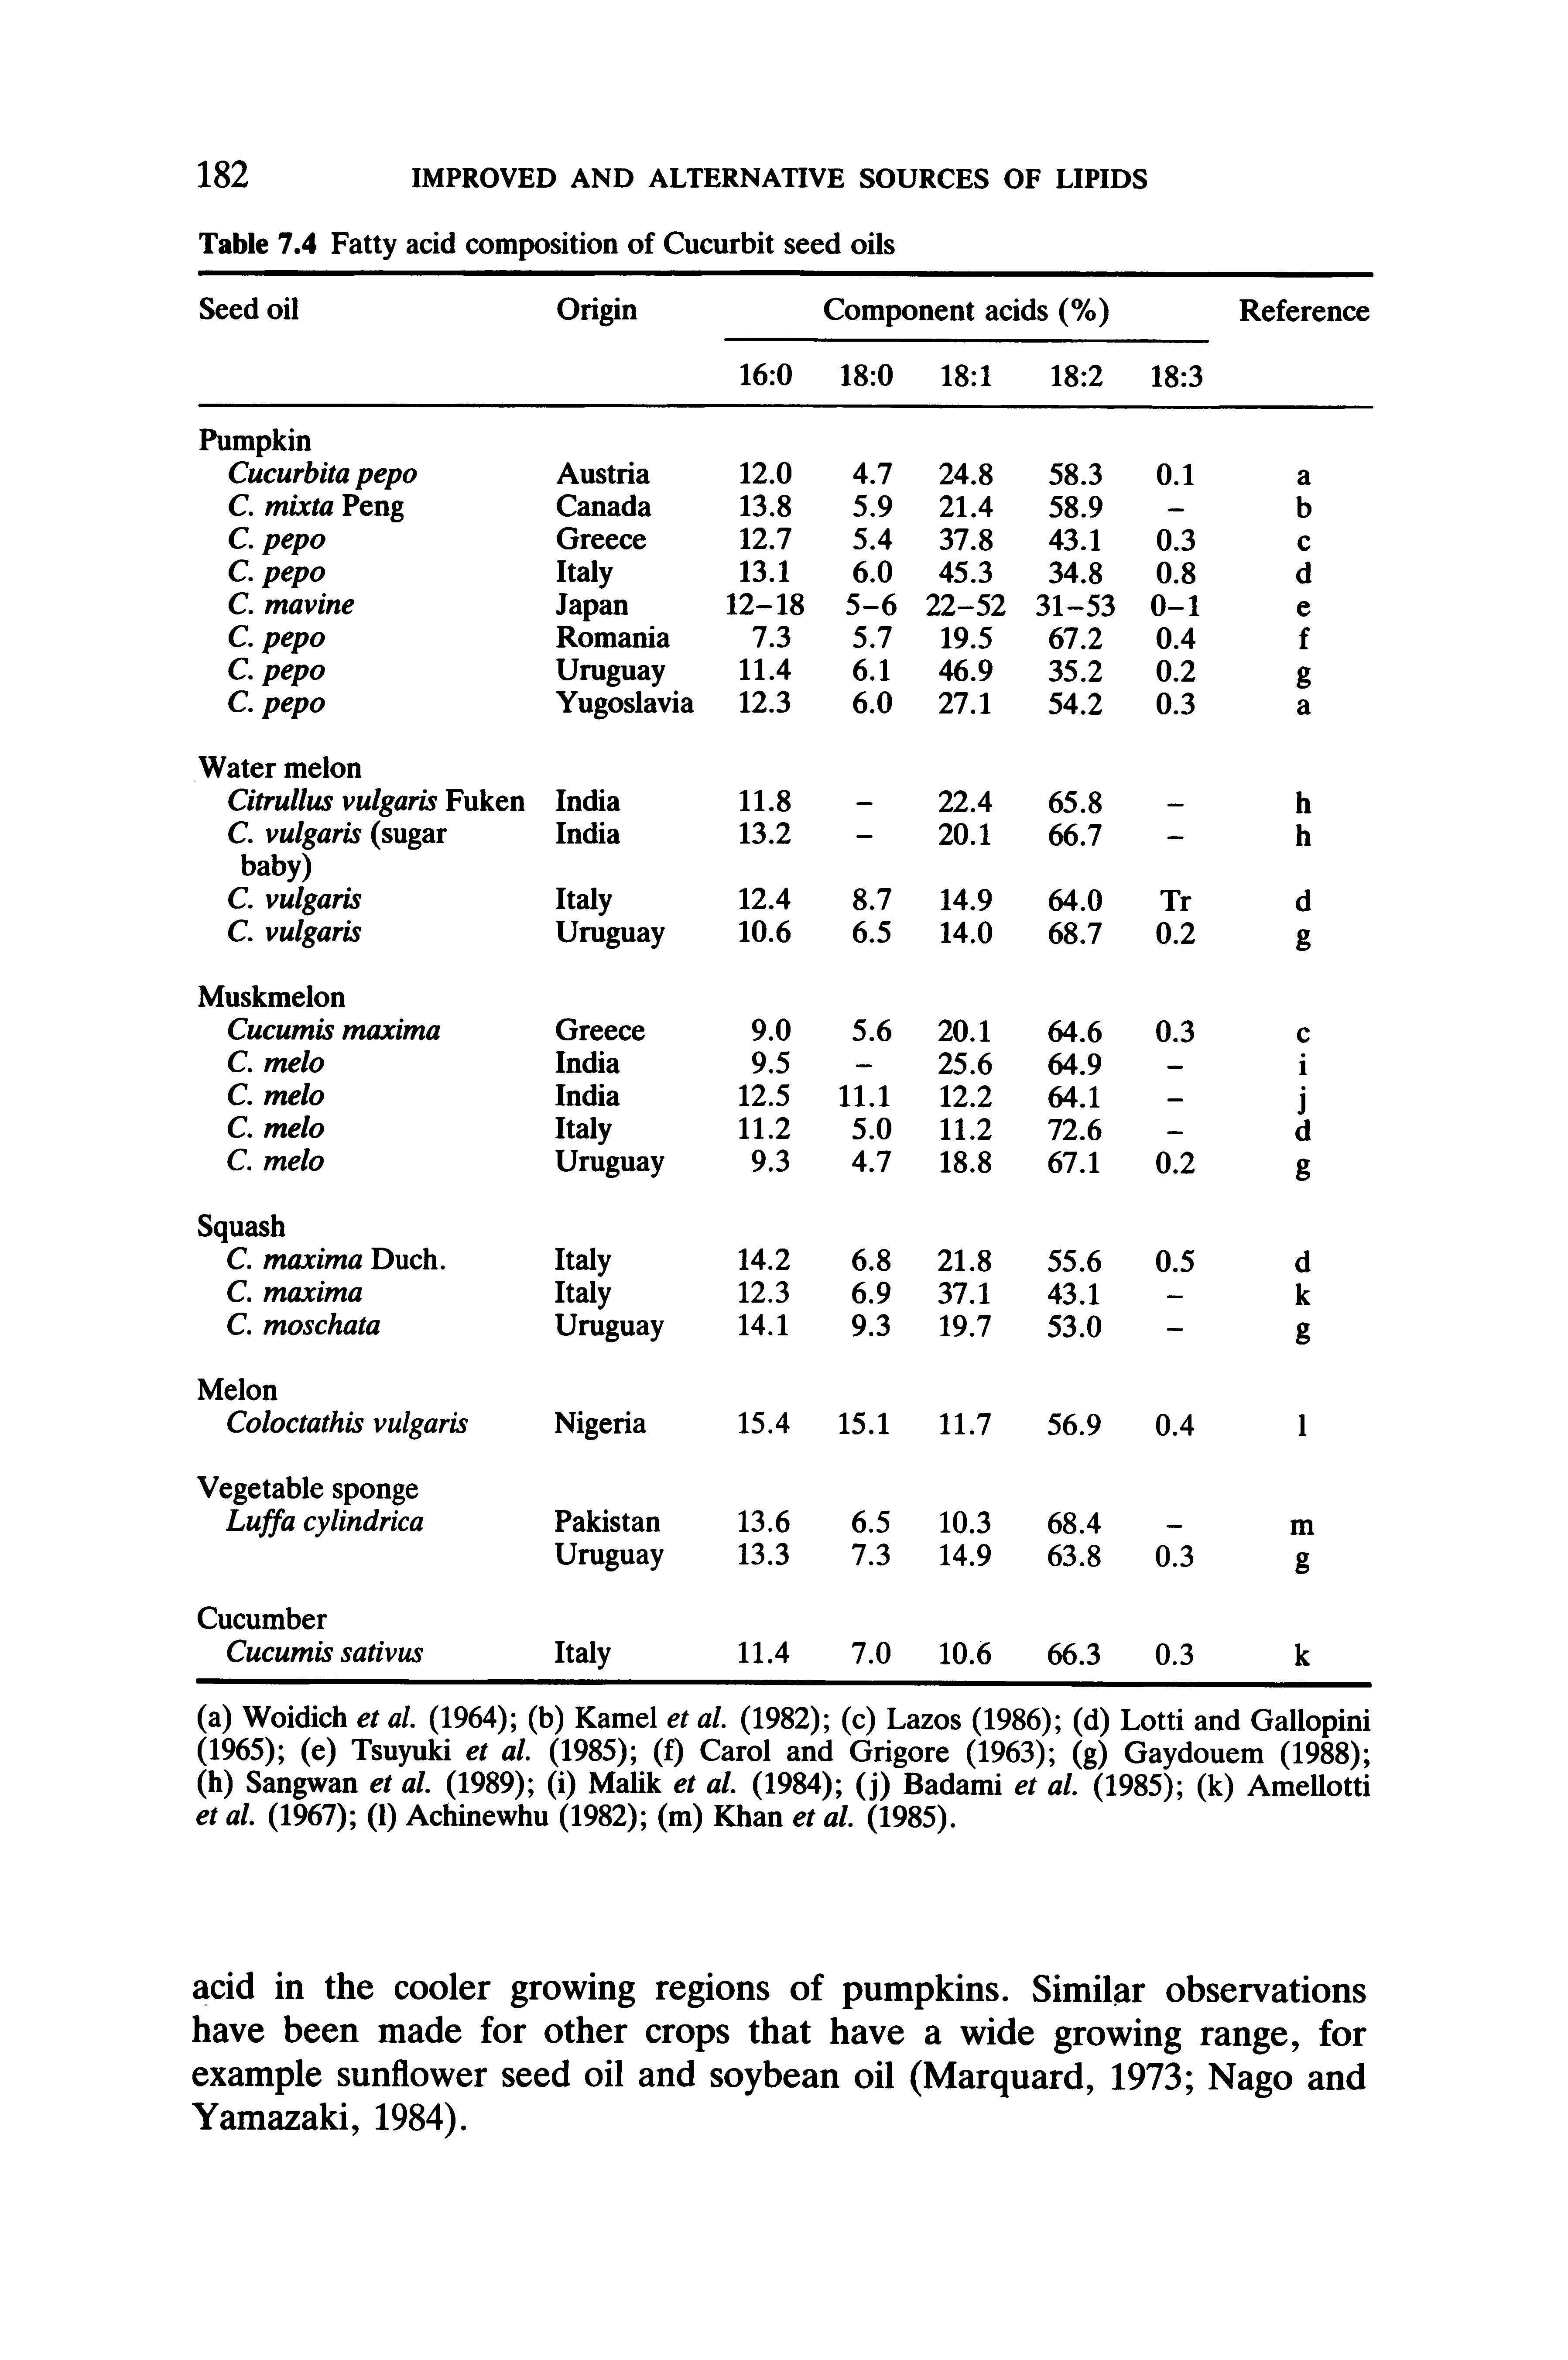 Table 7.4 Fatty acid composition of Cucurbit seed oils...